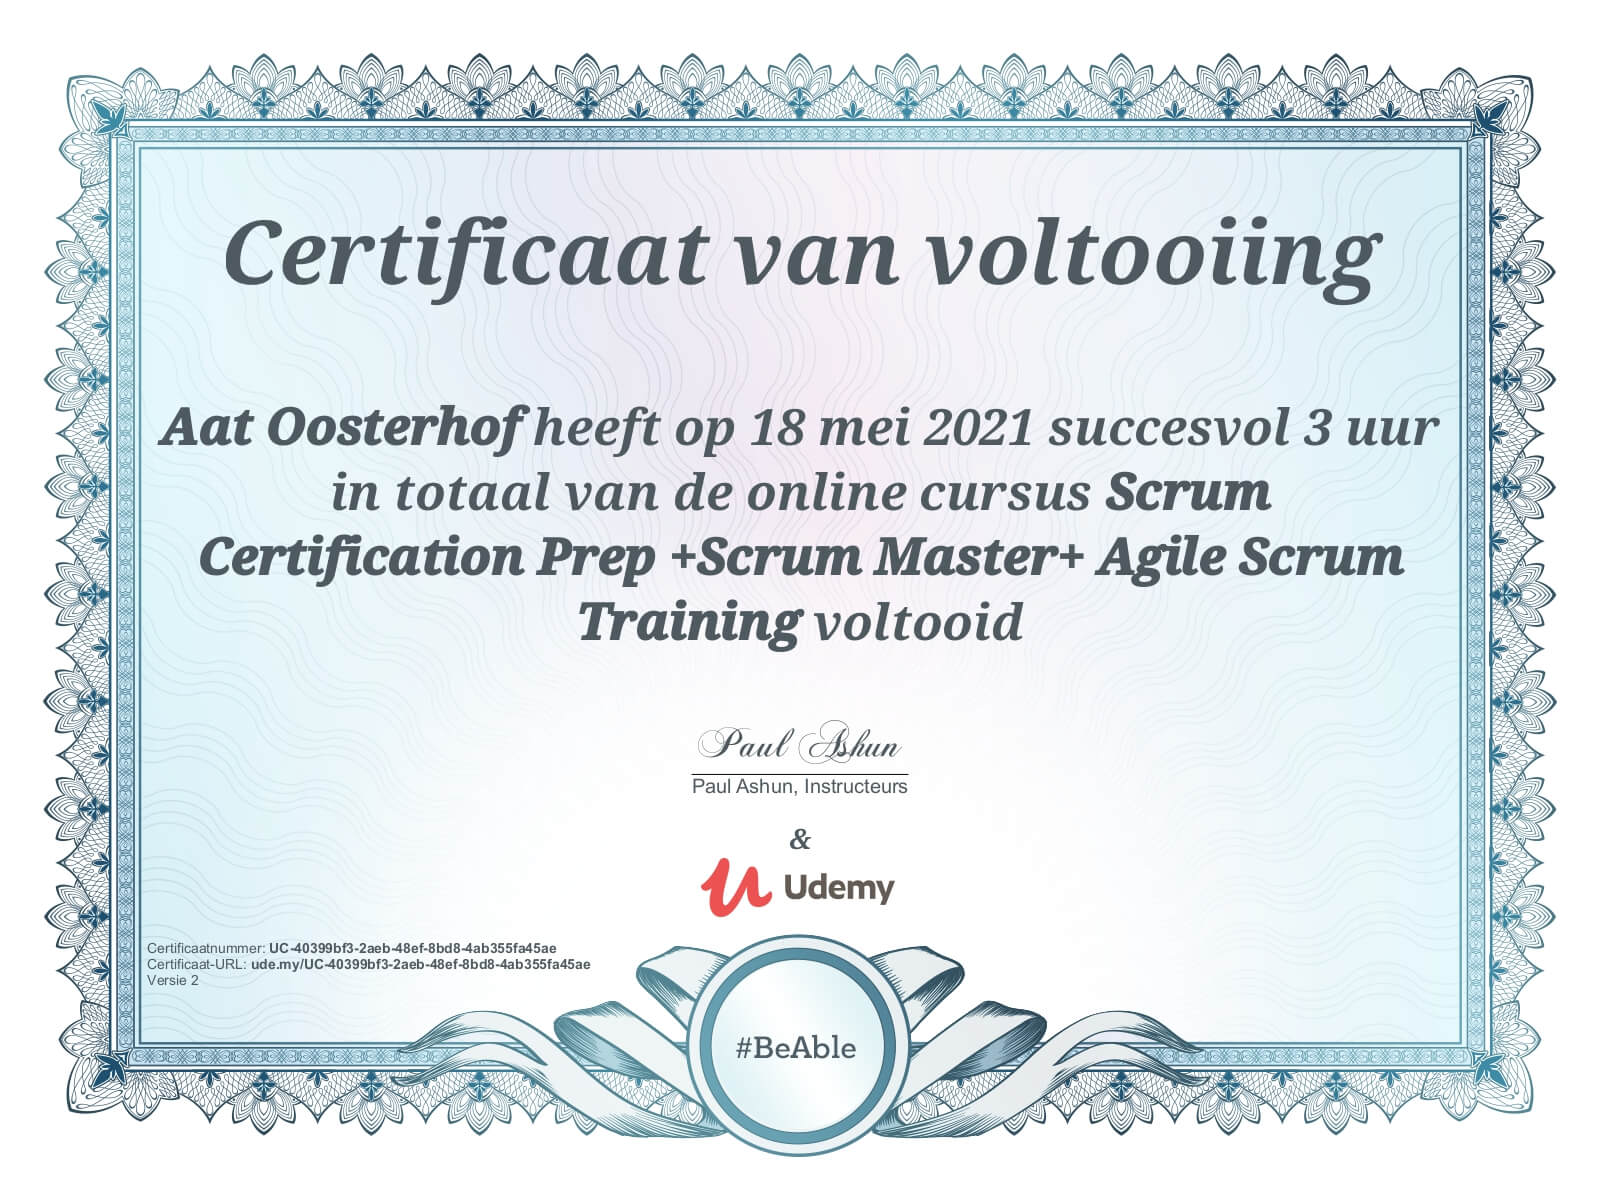 Udemy - Scrum Certification Prep +Scrum Master+ Agile Scrum Training Aat Oosterhof